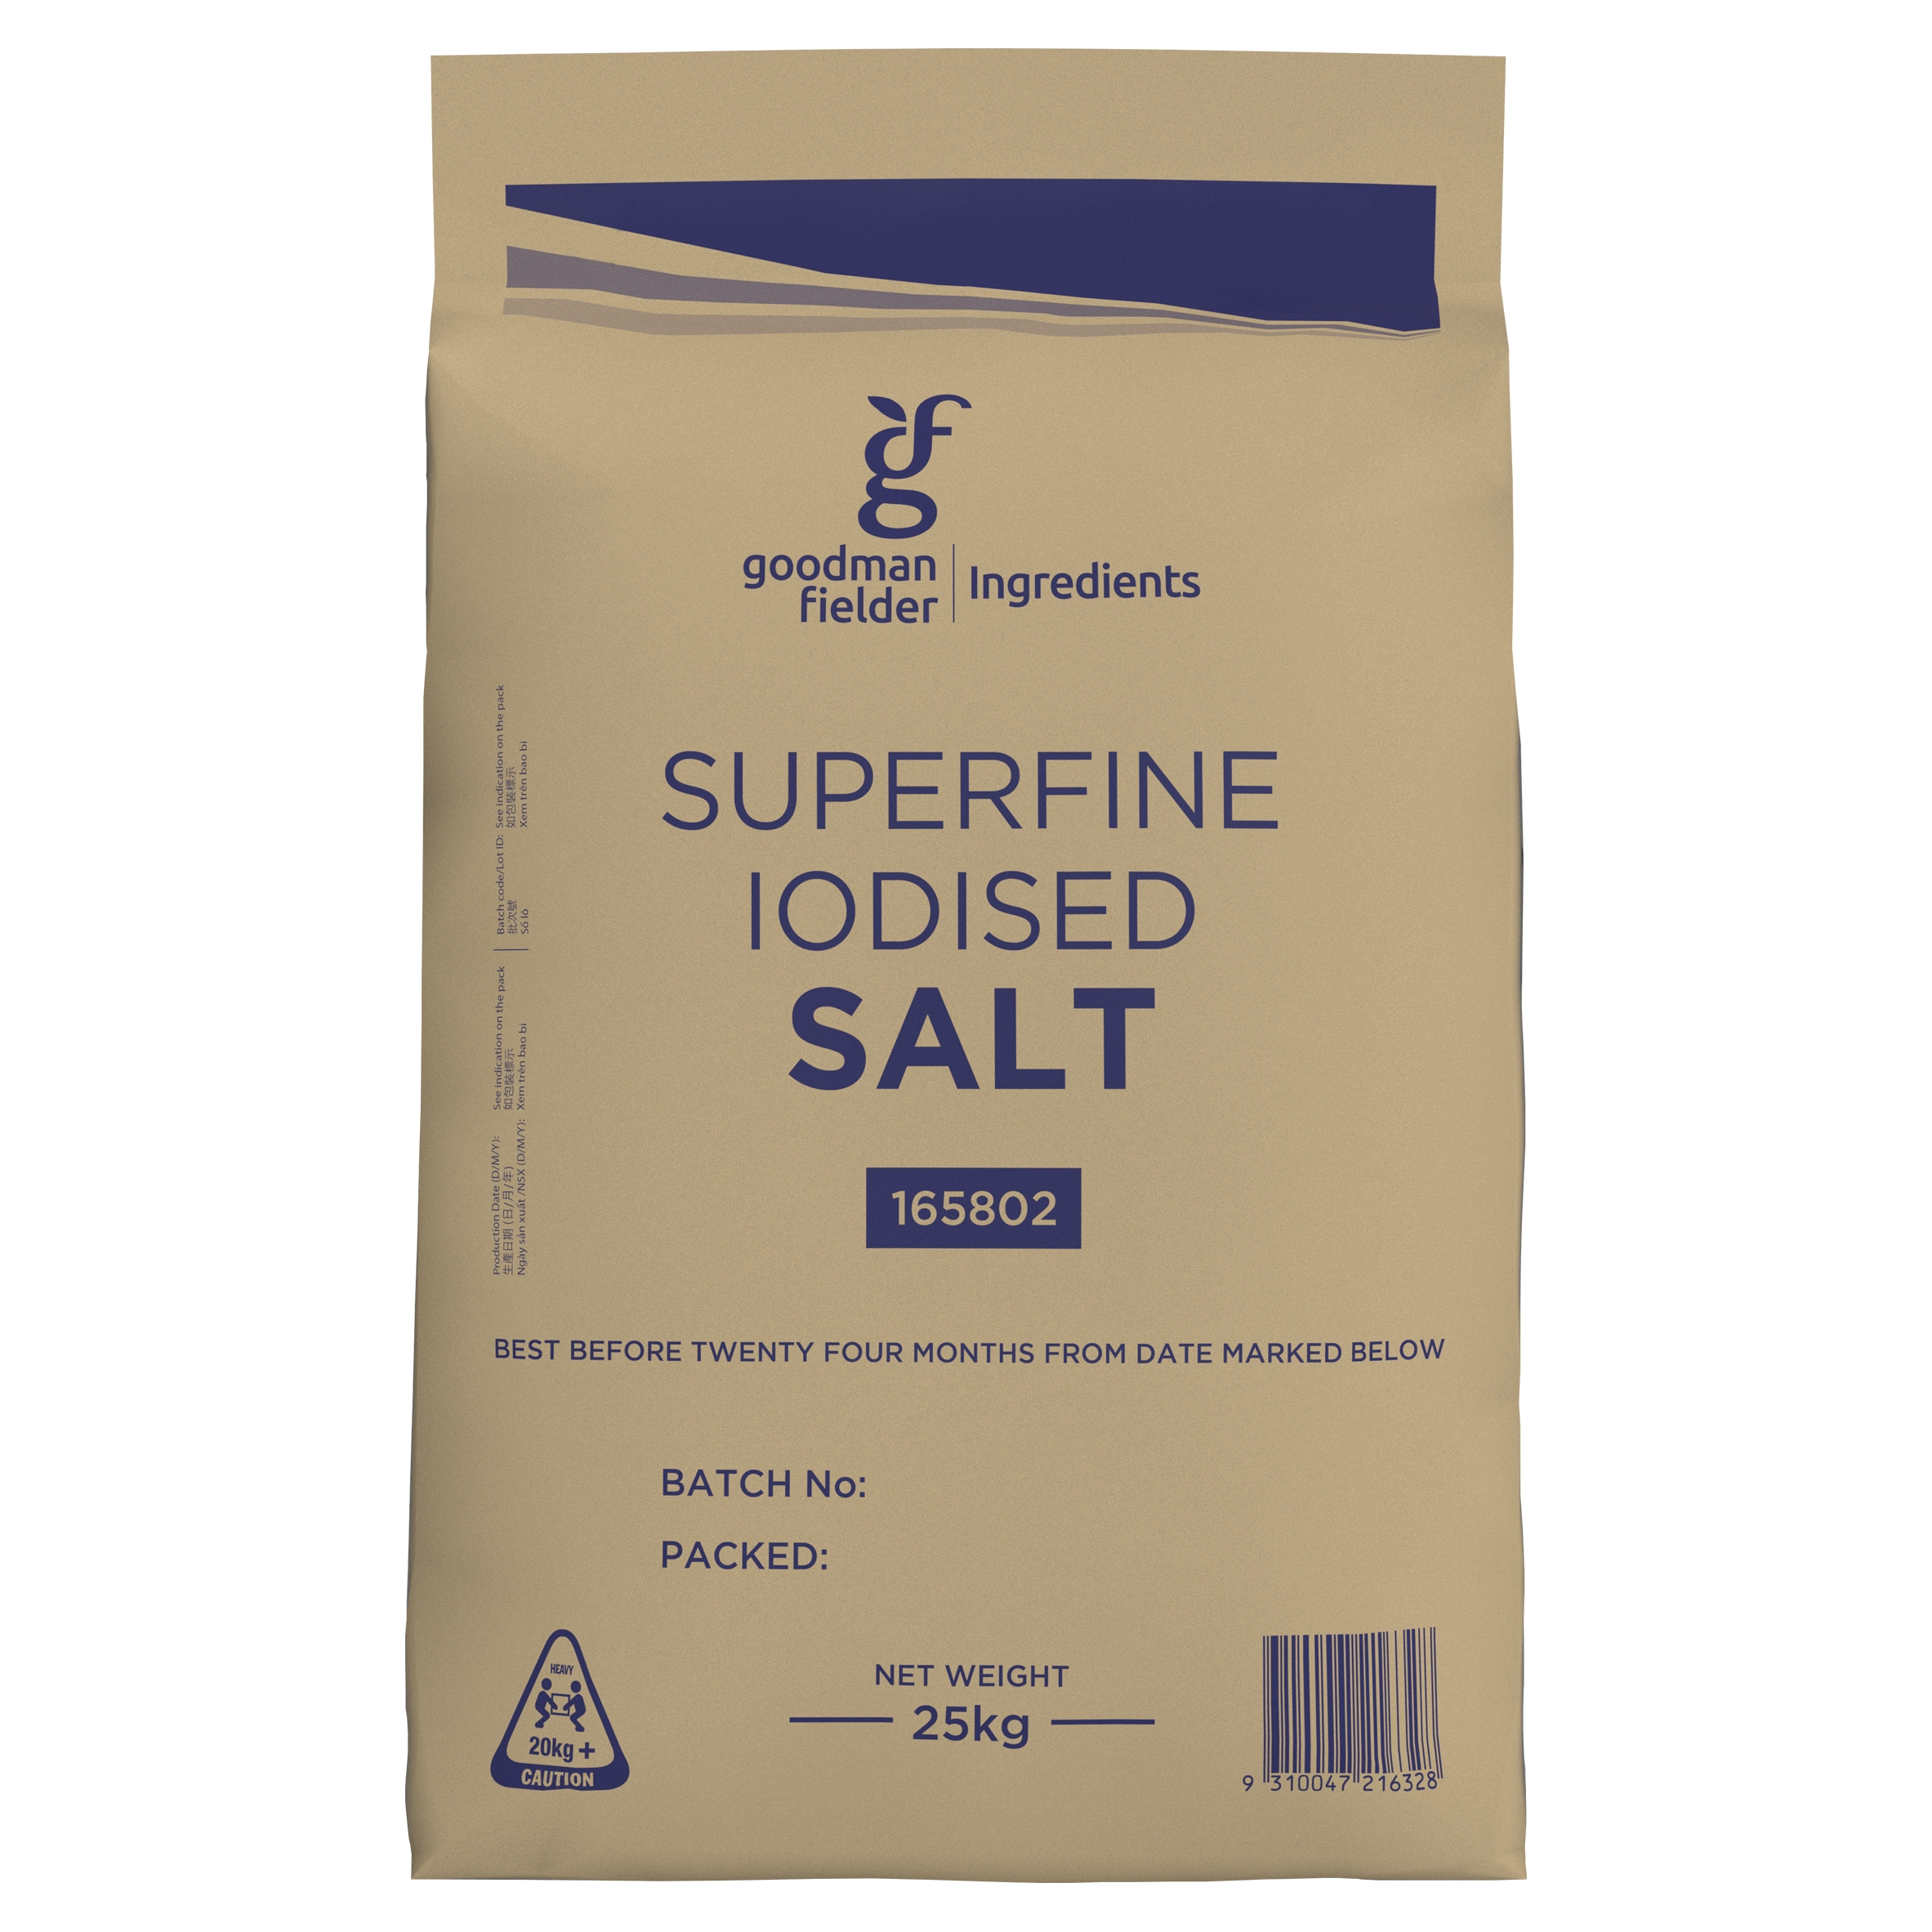 Goodman Fielder Ingredients Superfine Iodised Salt 25kg